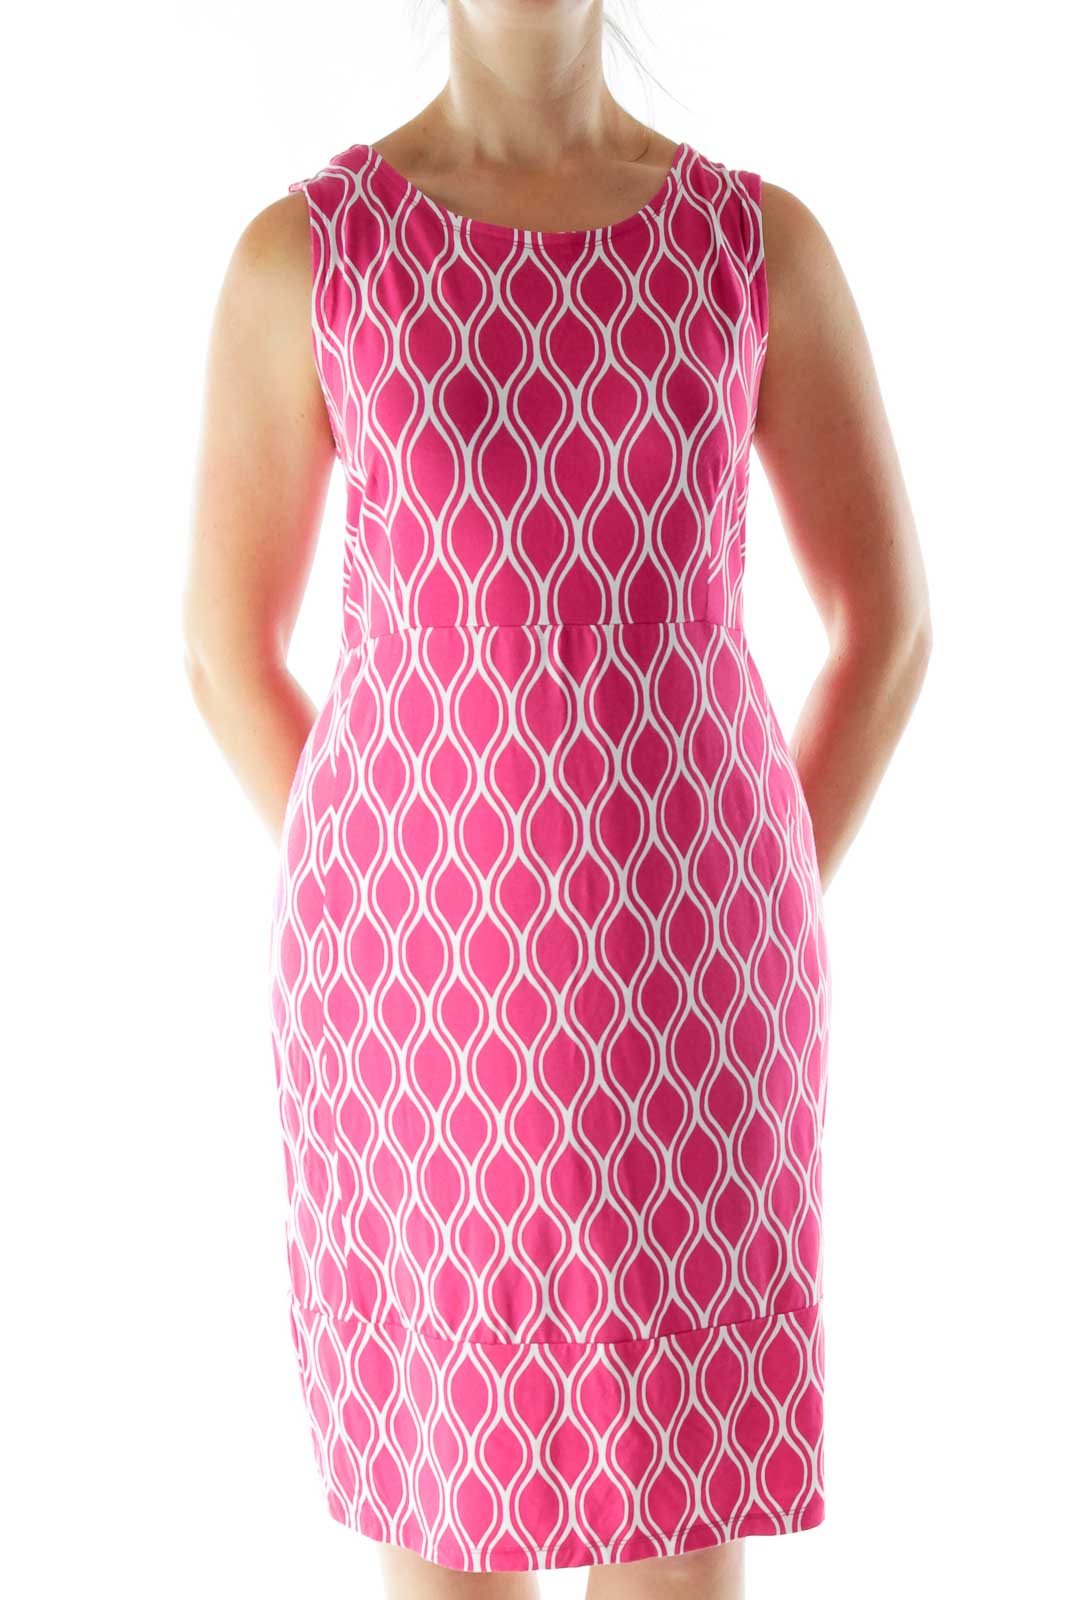 Hot Pink Print Jersey Dress Front